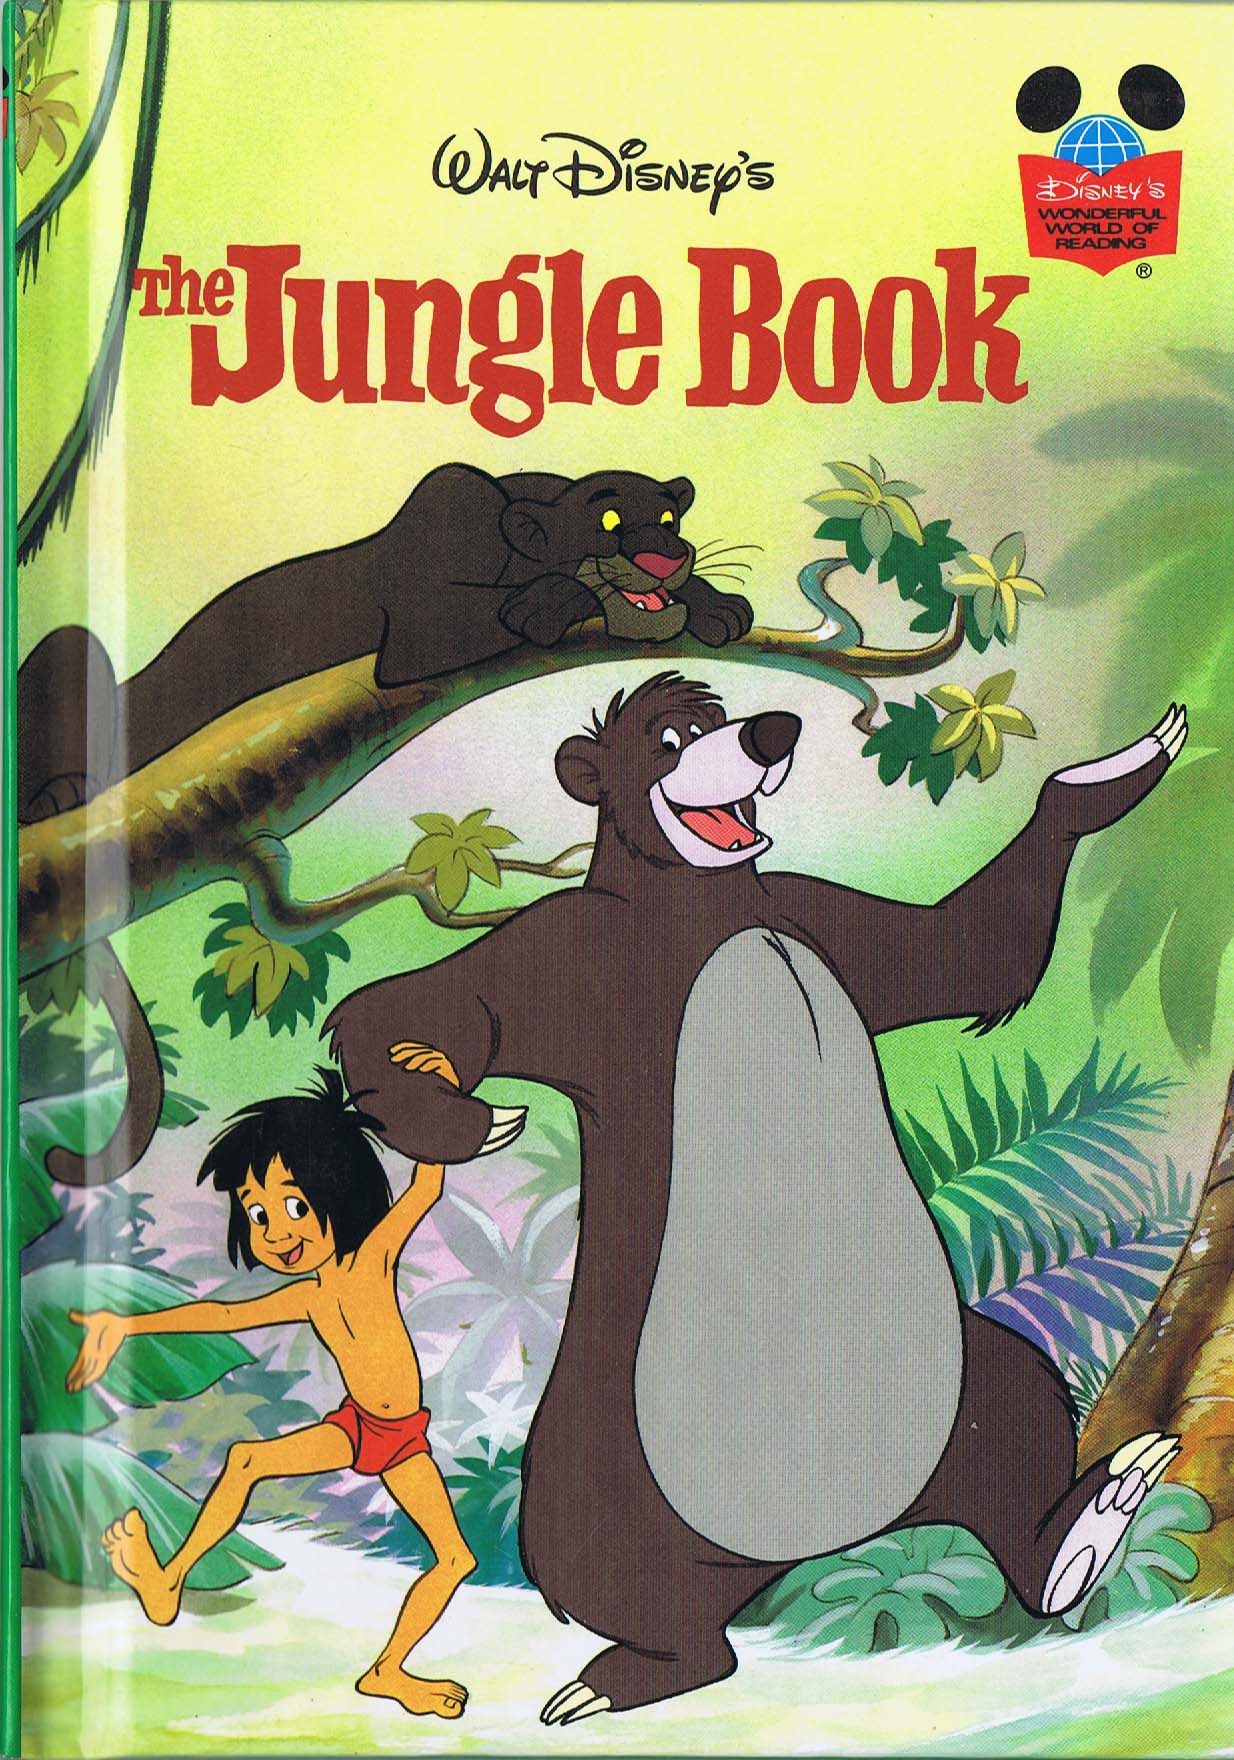 The jungle book original story - mirrorpasa